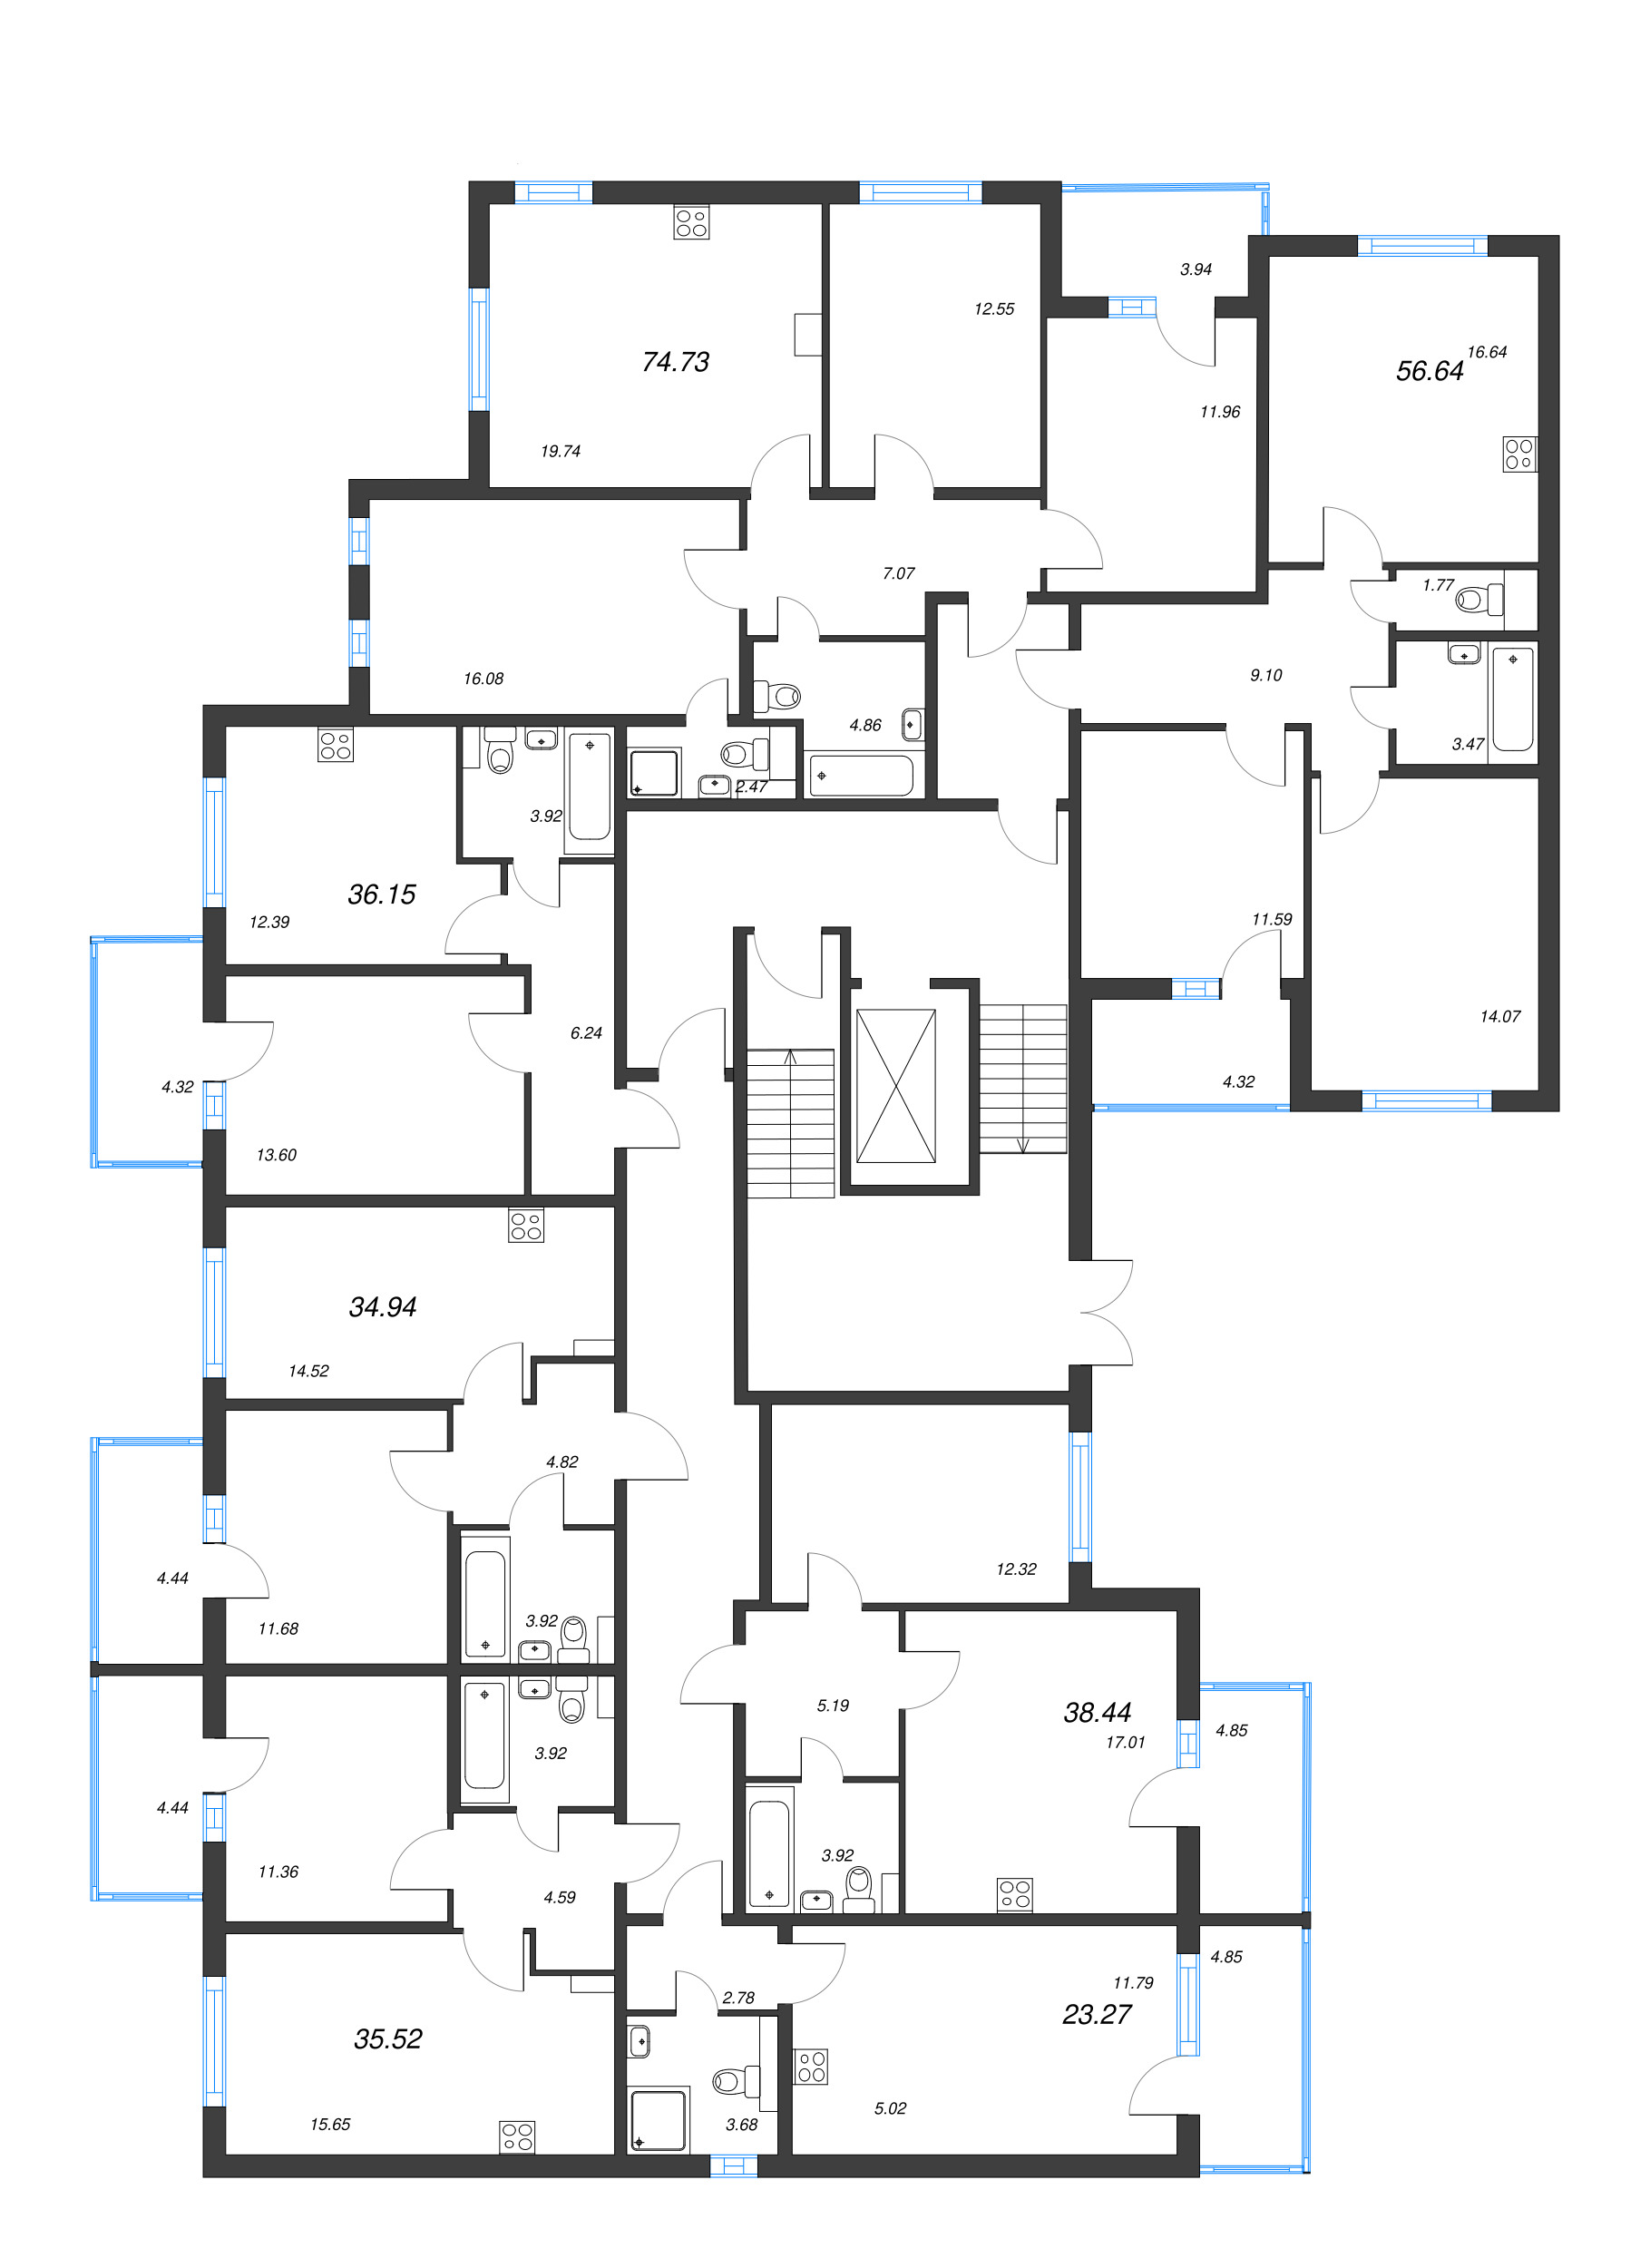 4-комнатная (Евро) квартира, 74.73 м² - планировка этажа